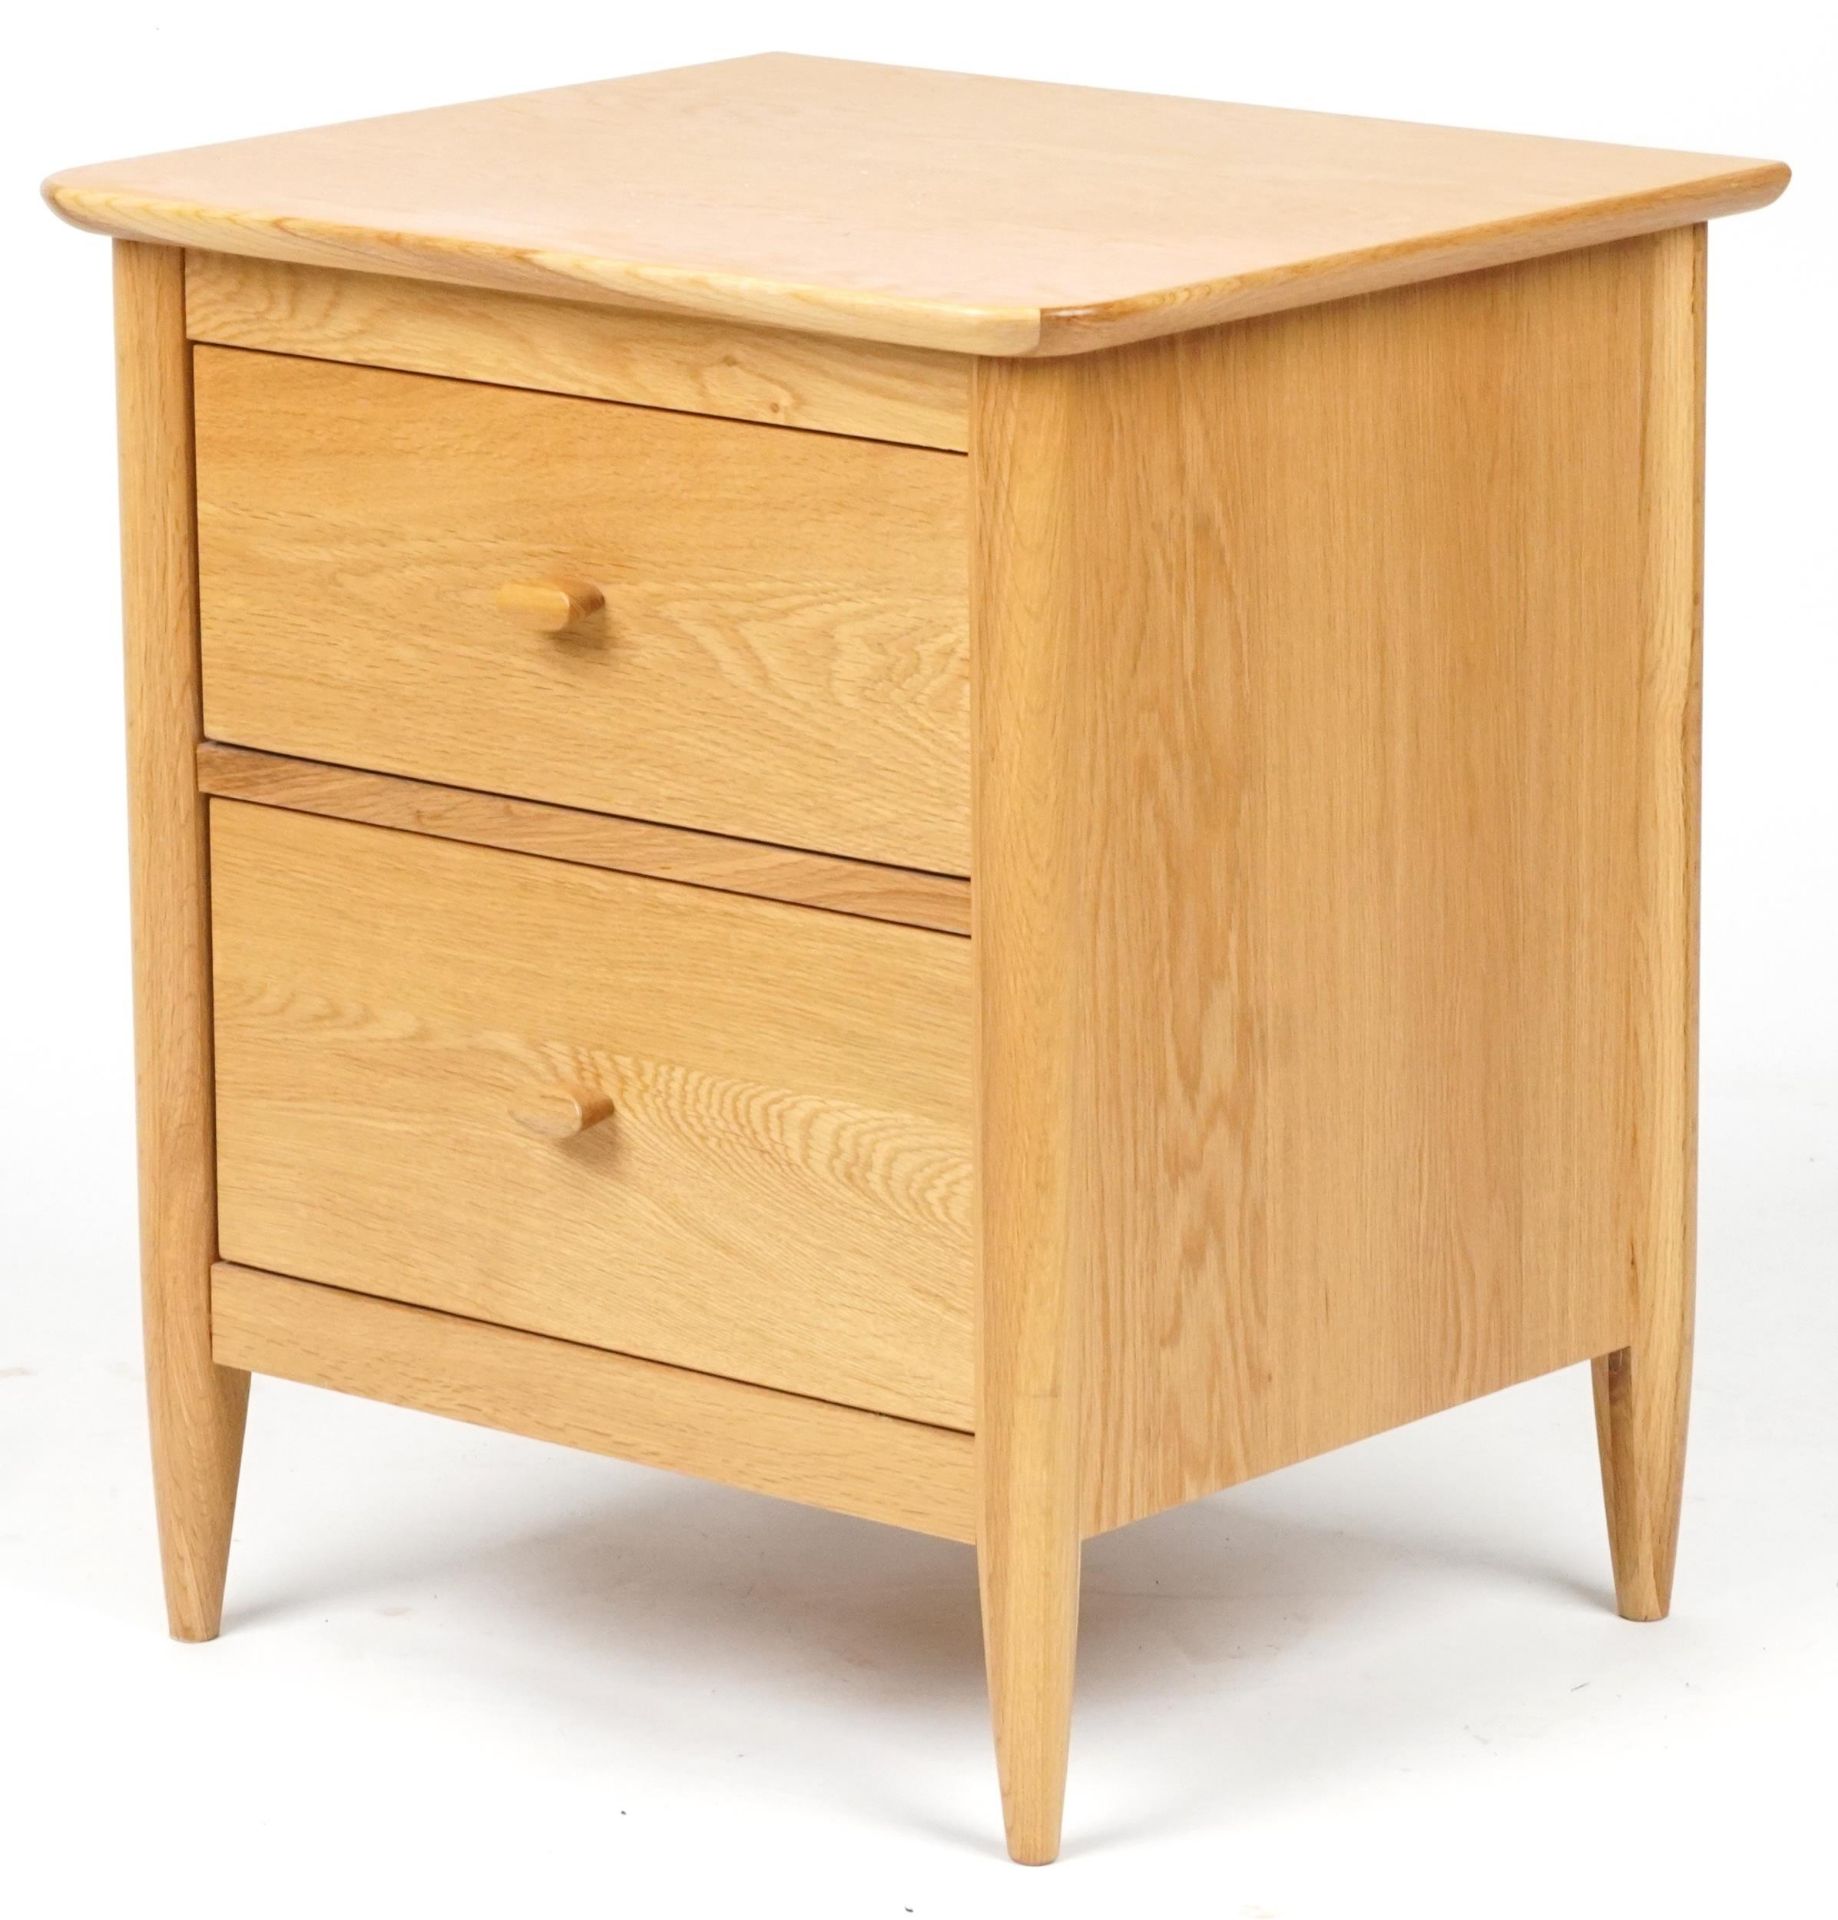 Ercol Teramo contemporary light oak two drawer bedside chest, 60cm H x 53cm W x 47cm D